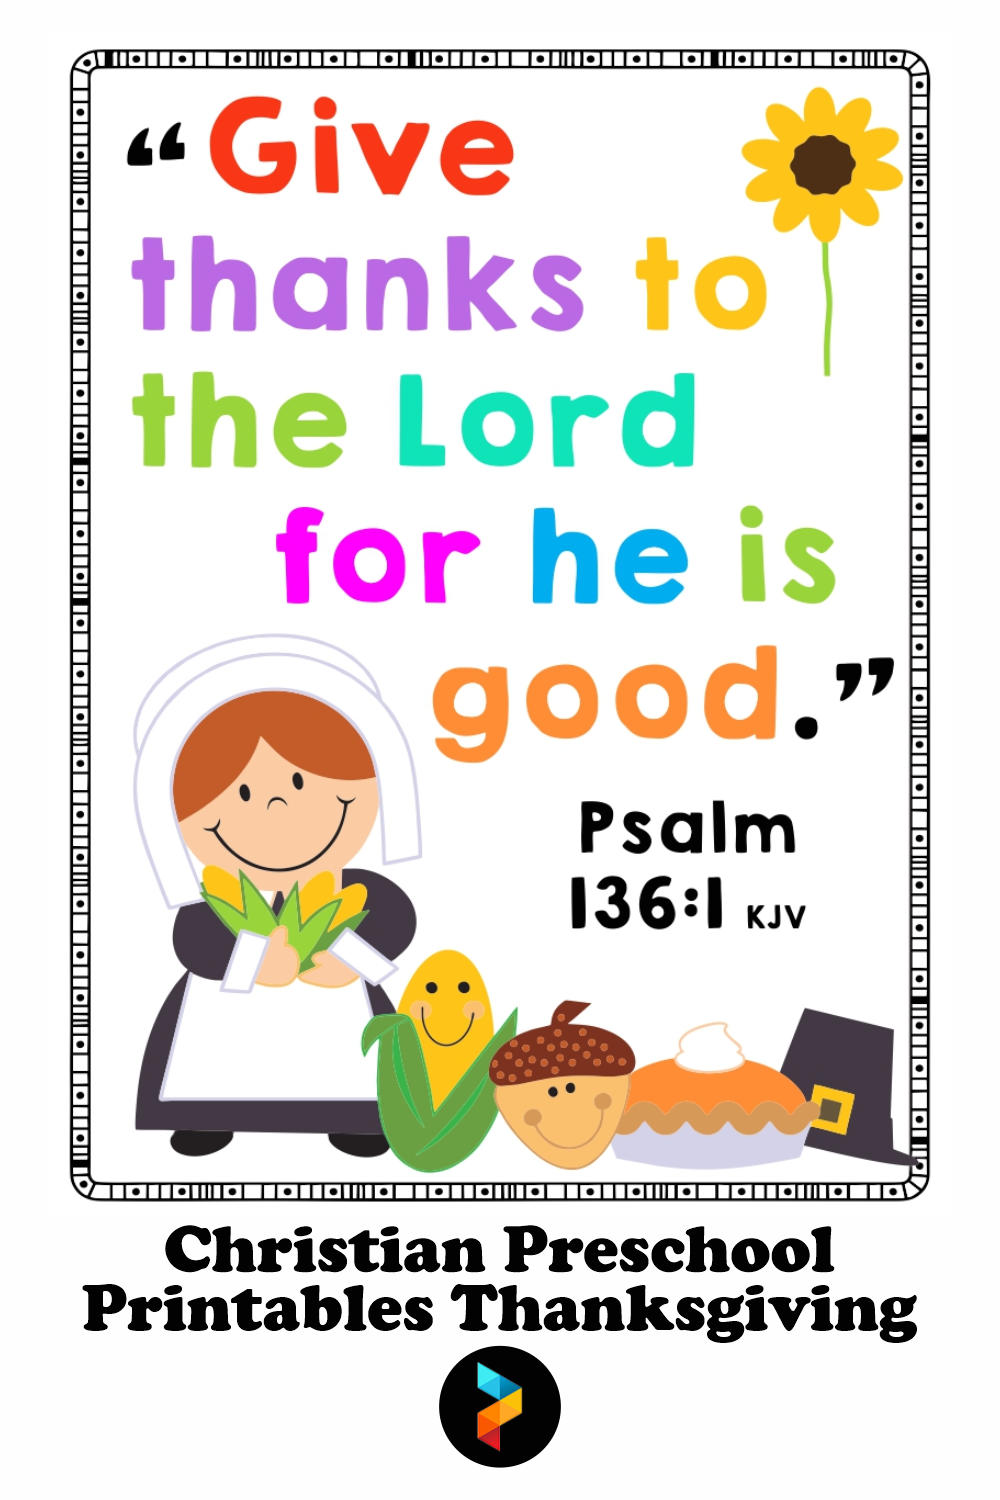 Christian Preschool Printables Thanksgiving